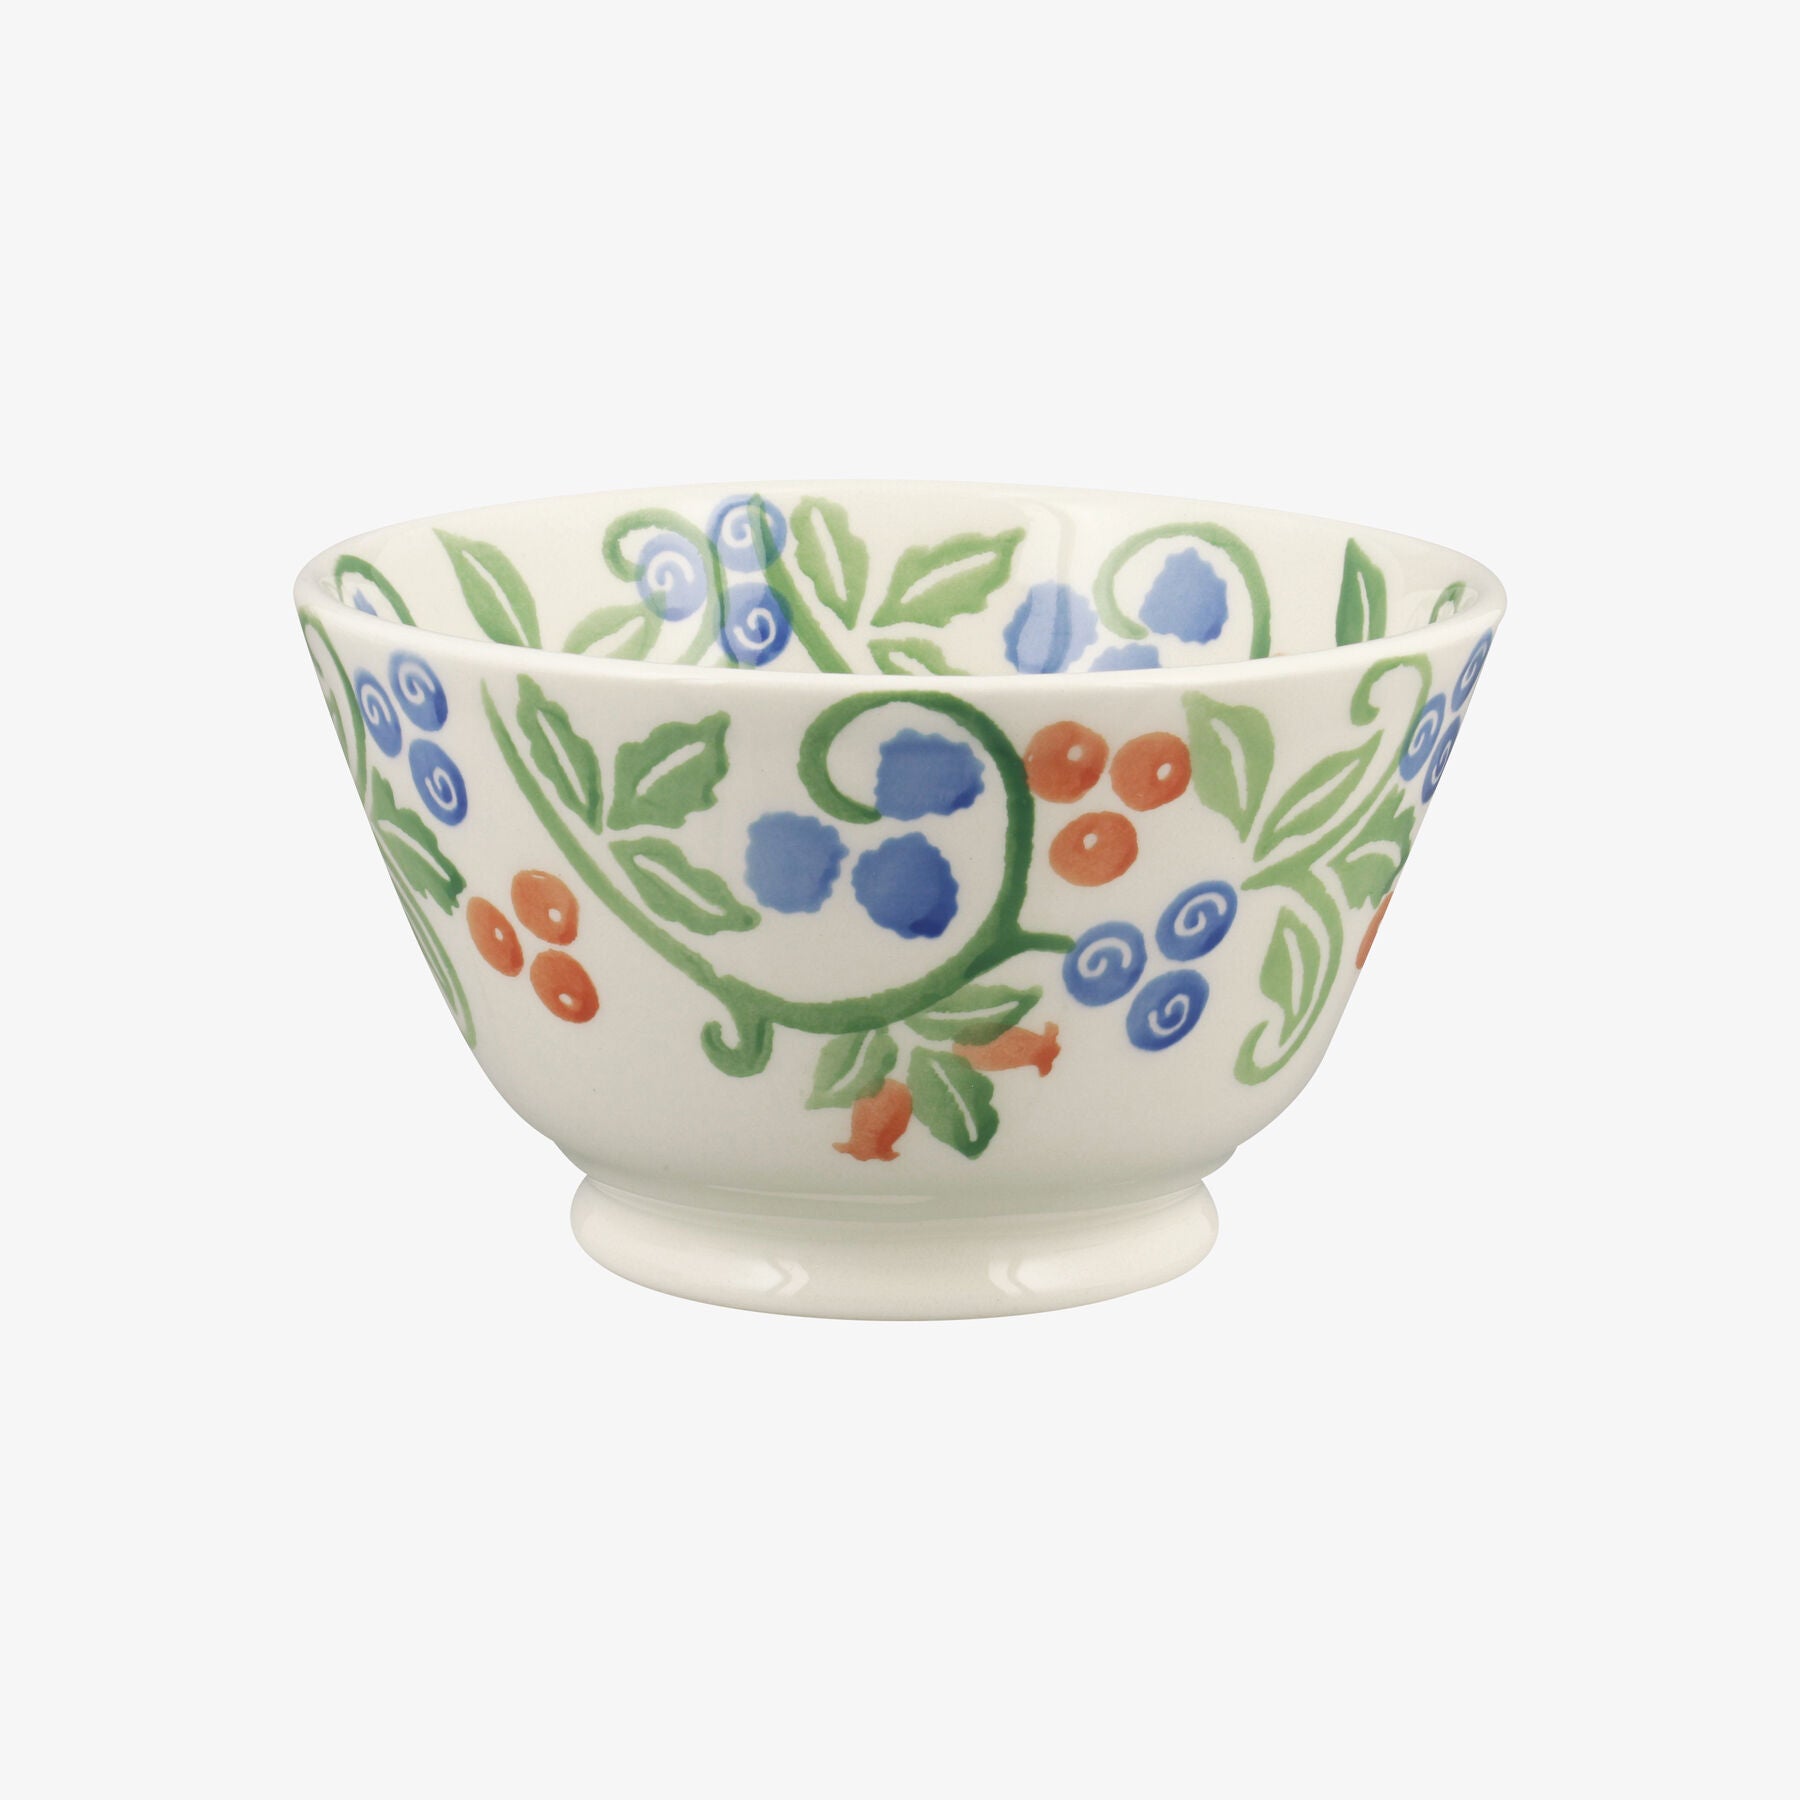 Emma Bridgewater  Folk Small Old Bowl - Unique Handmade & Handpainted English Earthenware Decorative